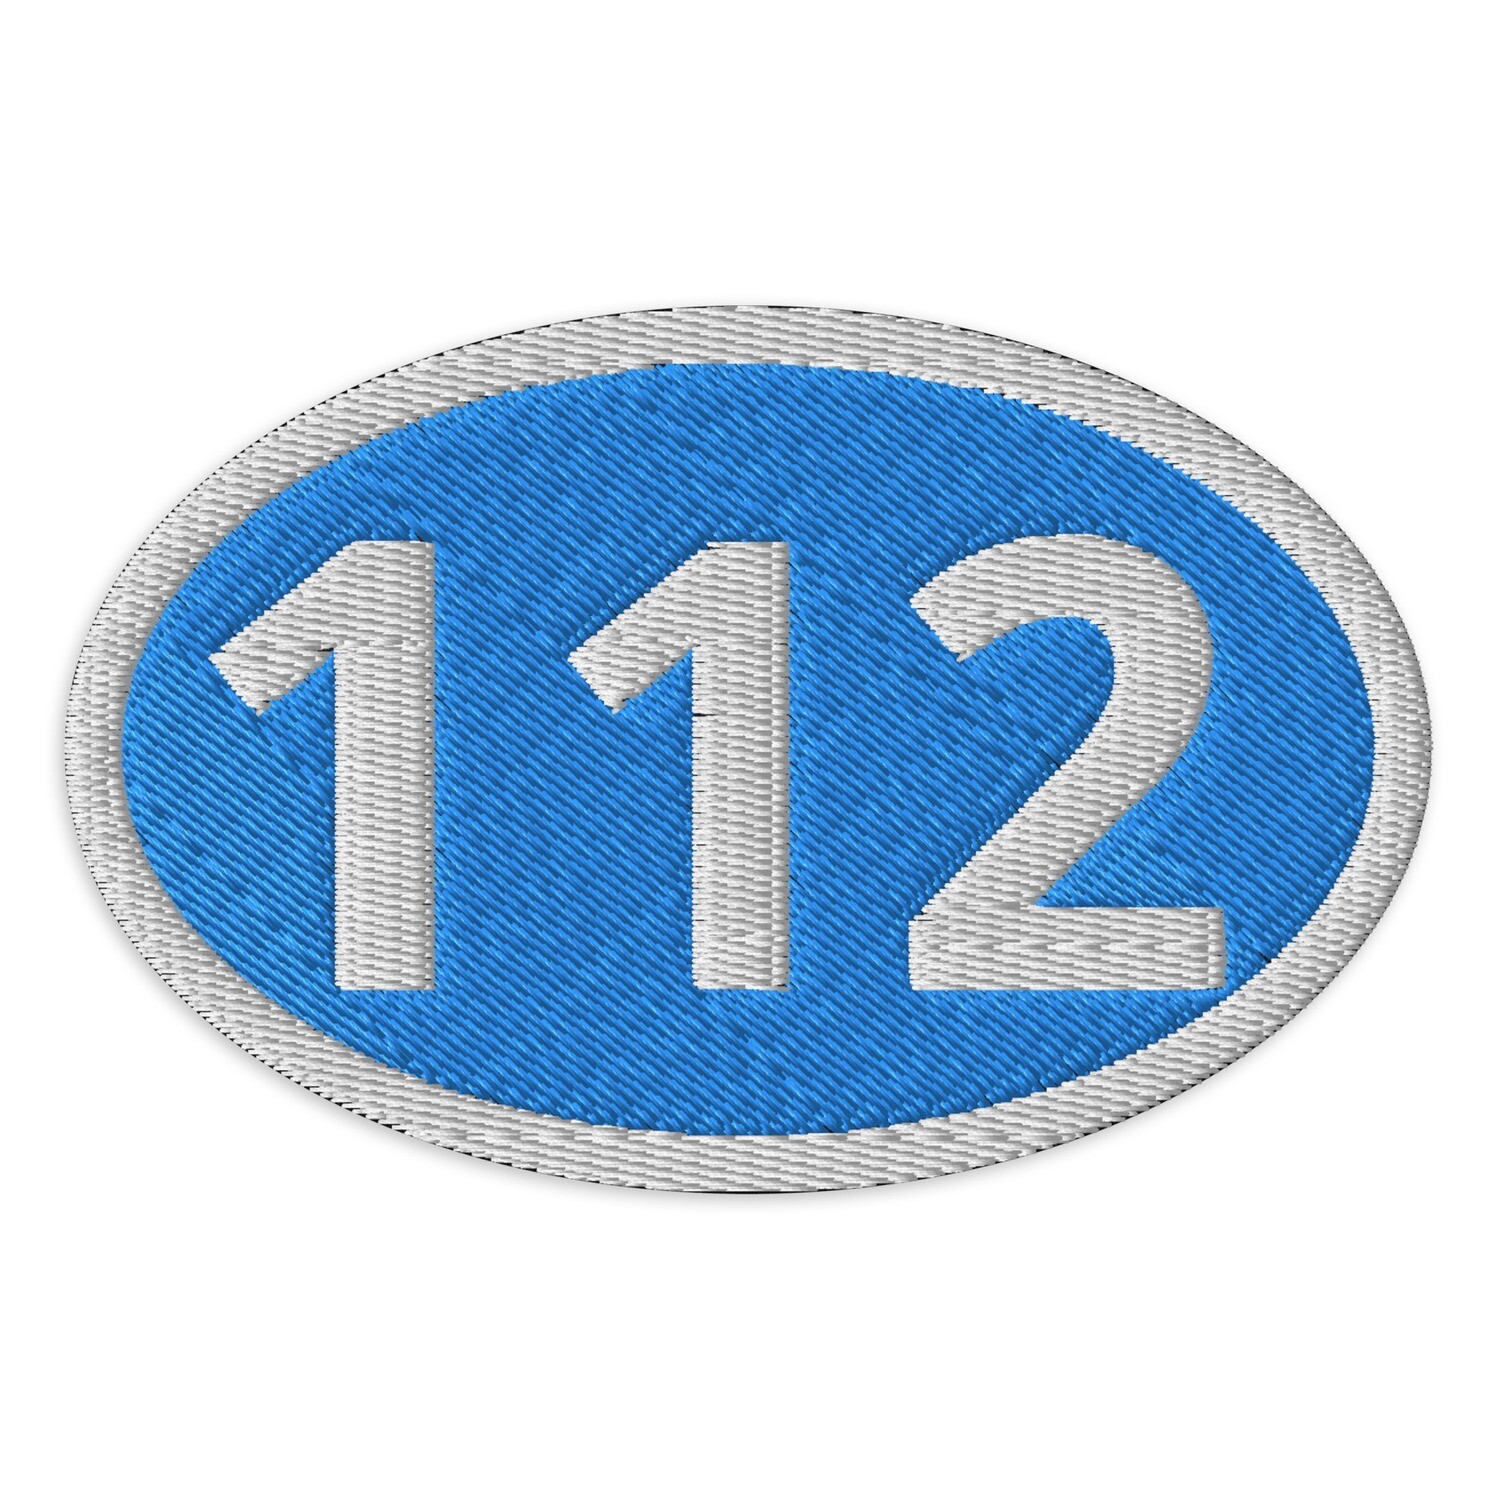 112 Patch - Oval 4″×2.6″